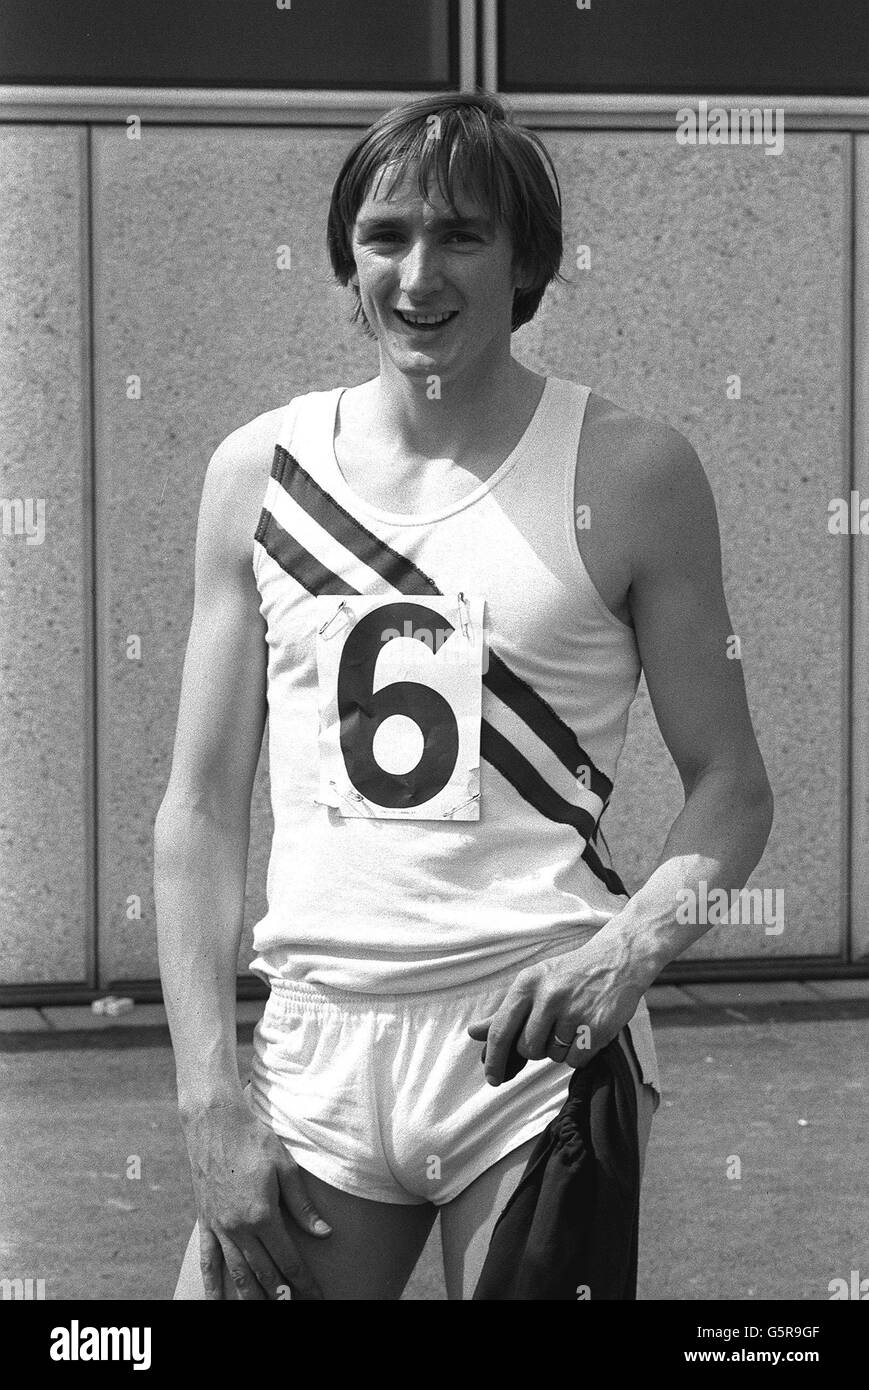 Hurdler Alan Pascoe, all set for the Commonwealth Games in Edinburgh. Stock Photo